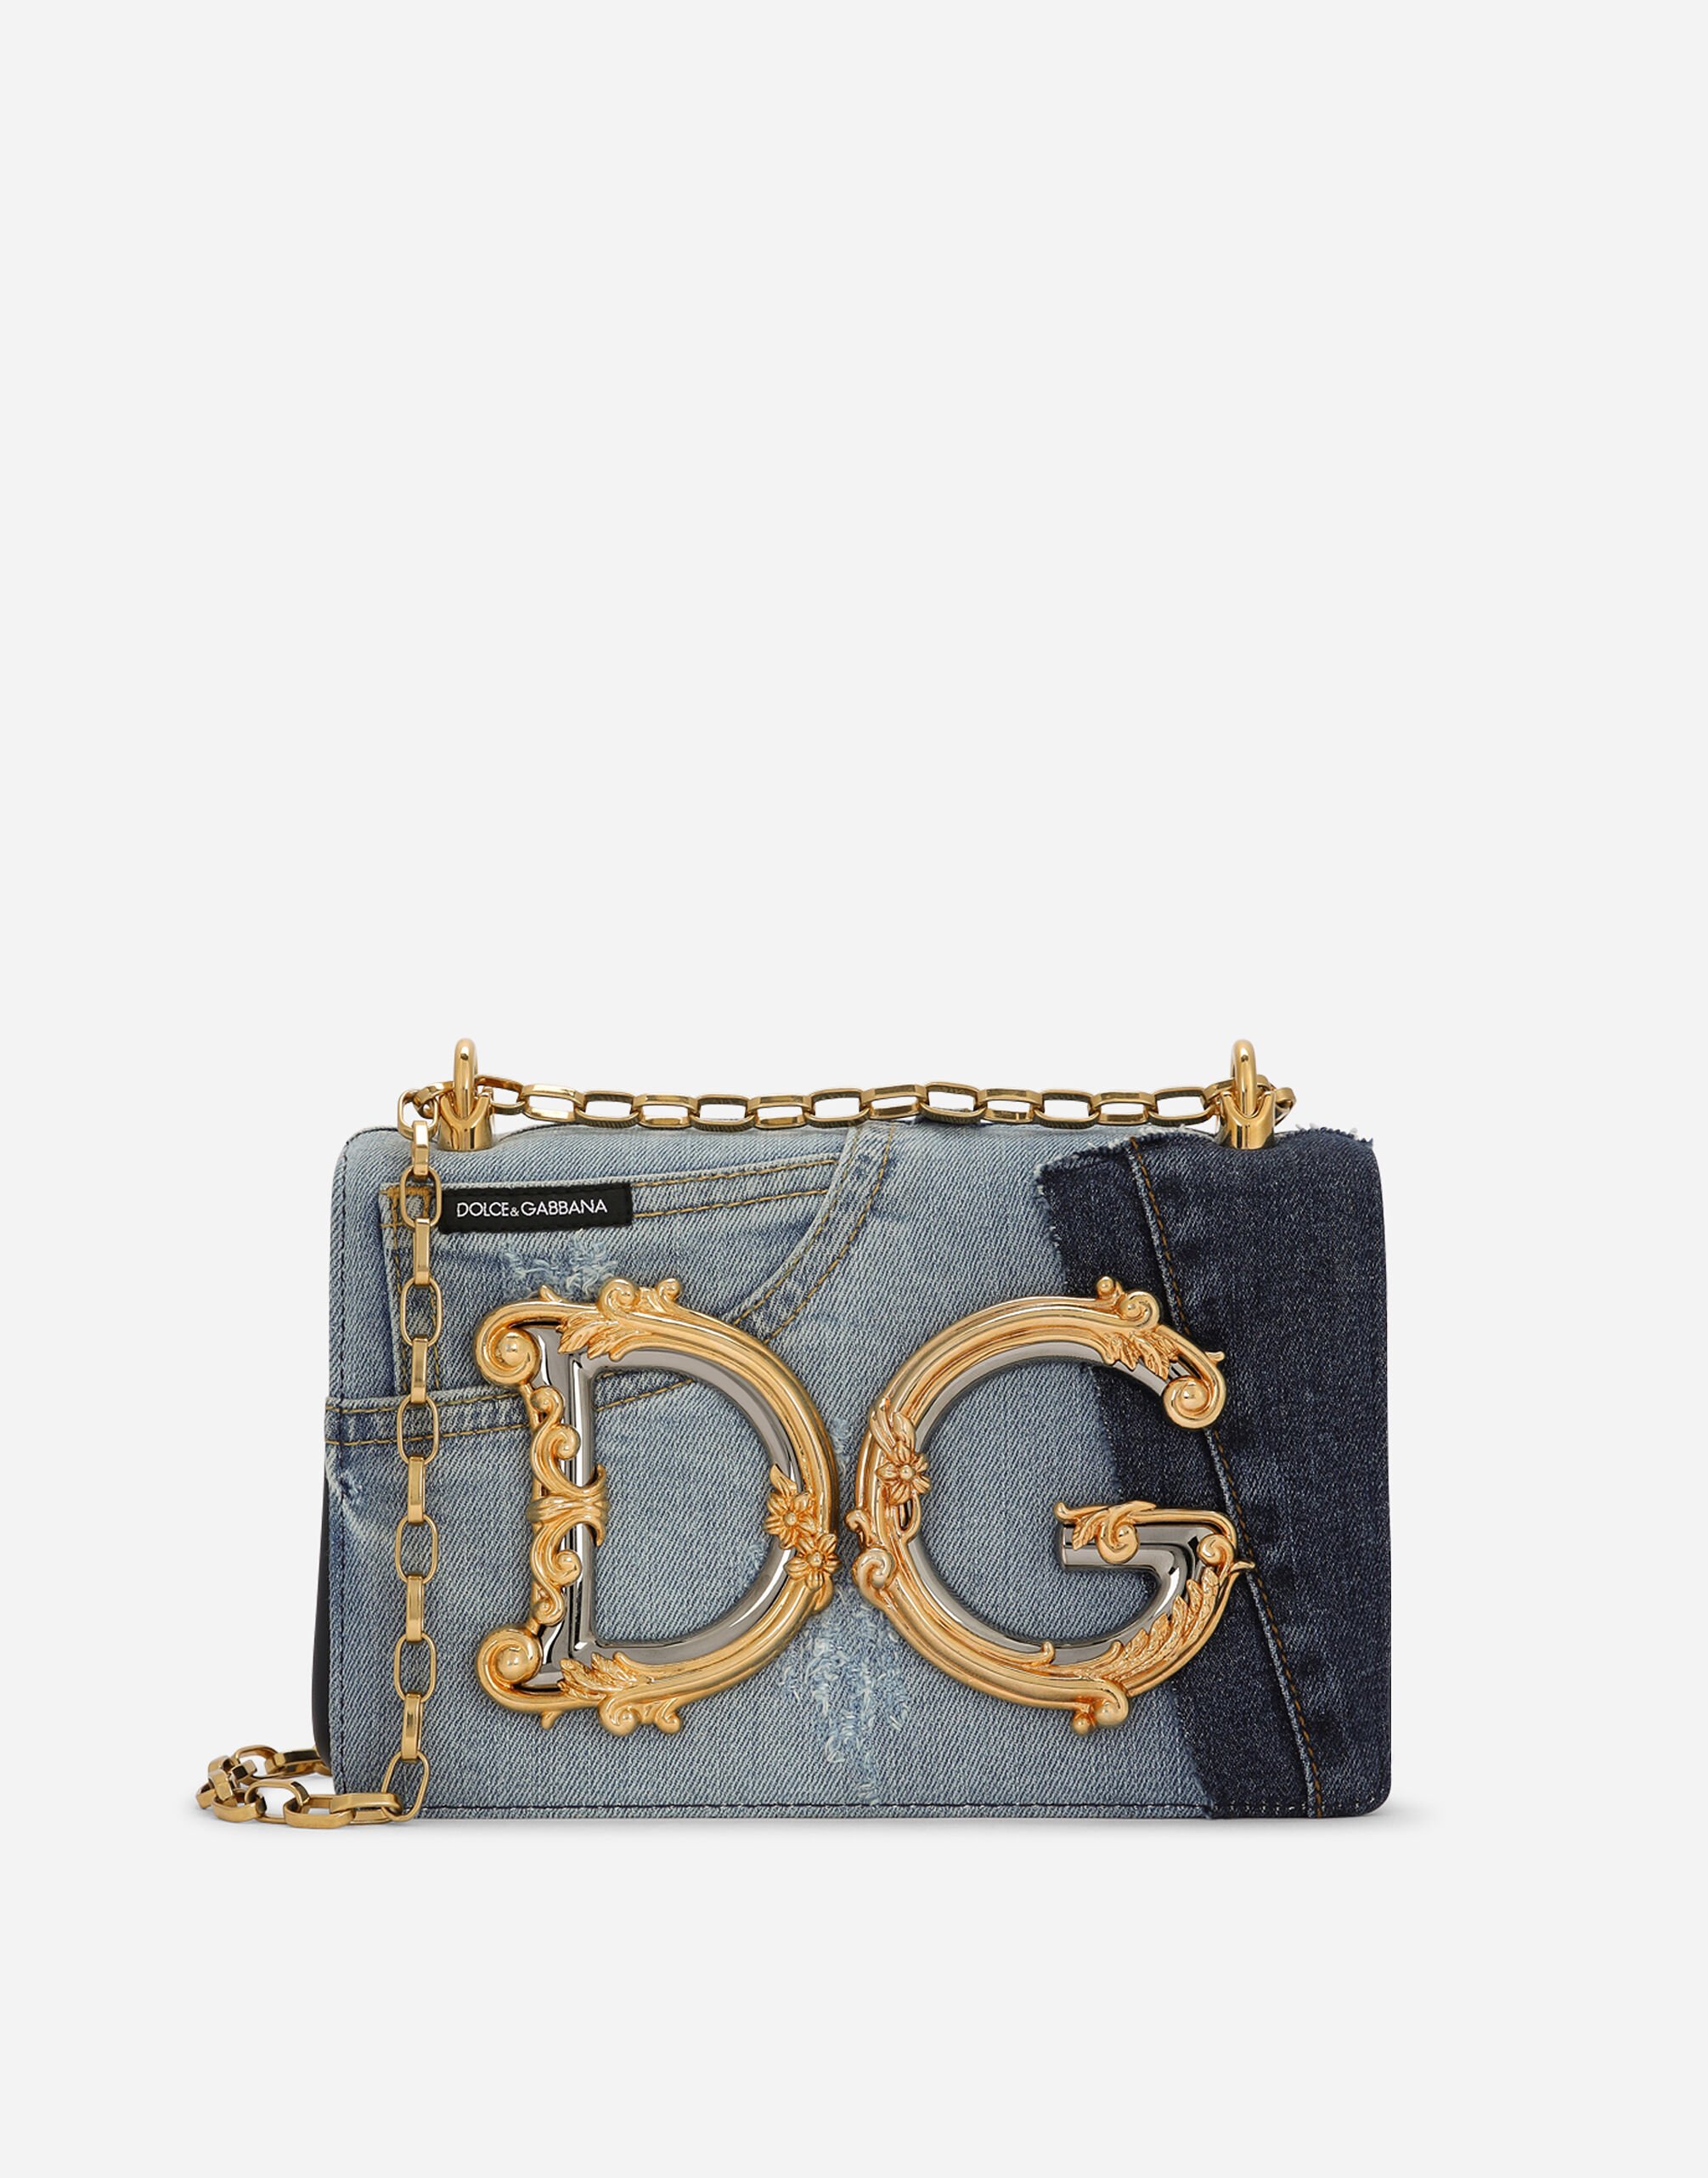 Dolce & Gabbana DG Girls bag in patchwork denim and plain calfskin Red BB6498AQ963